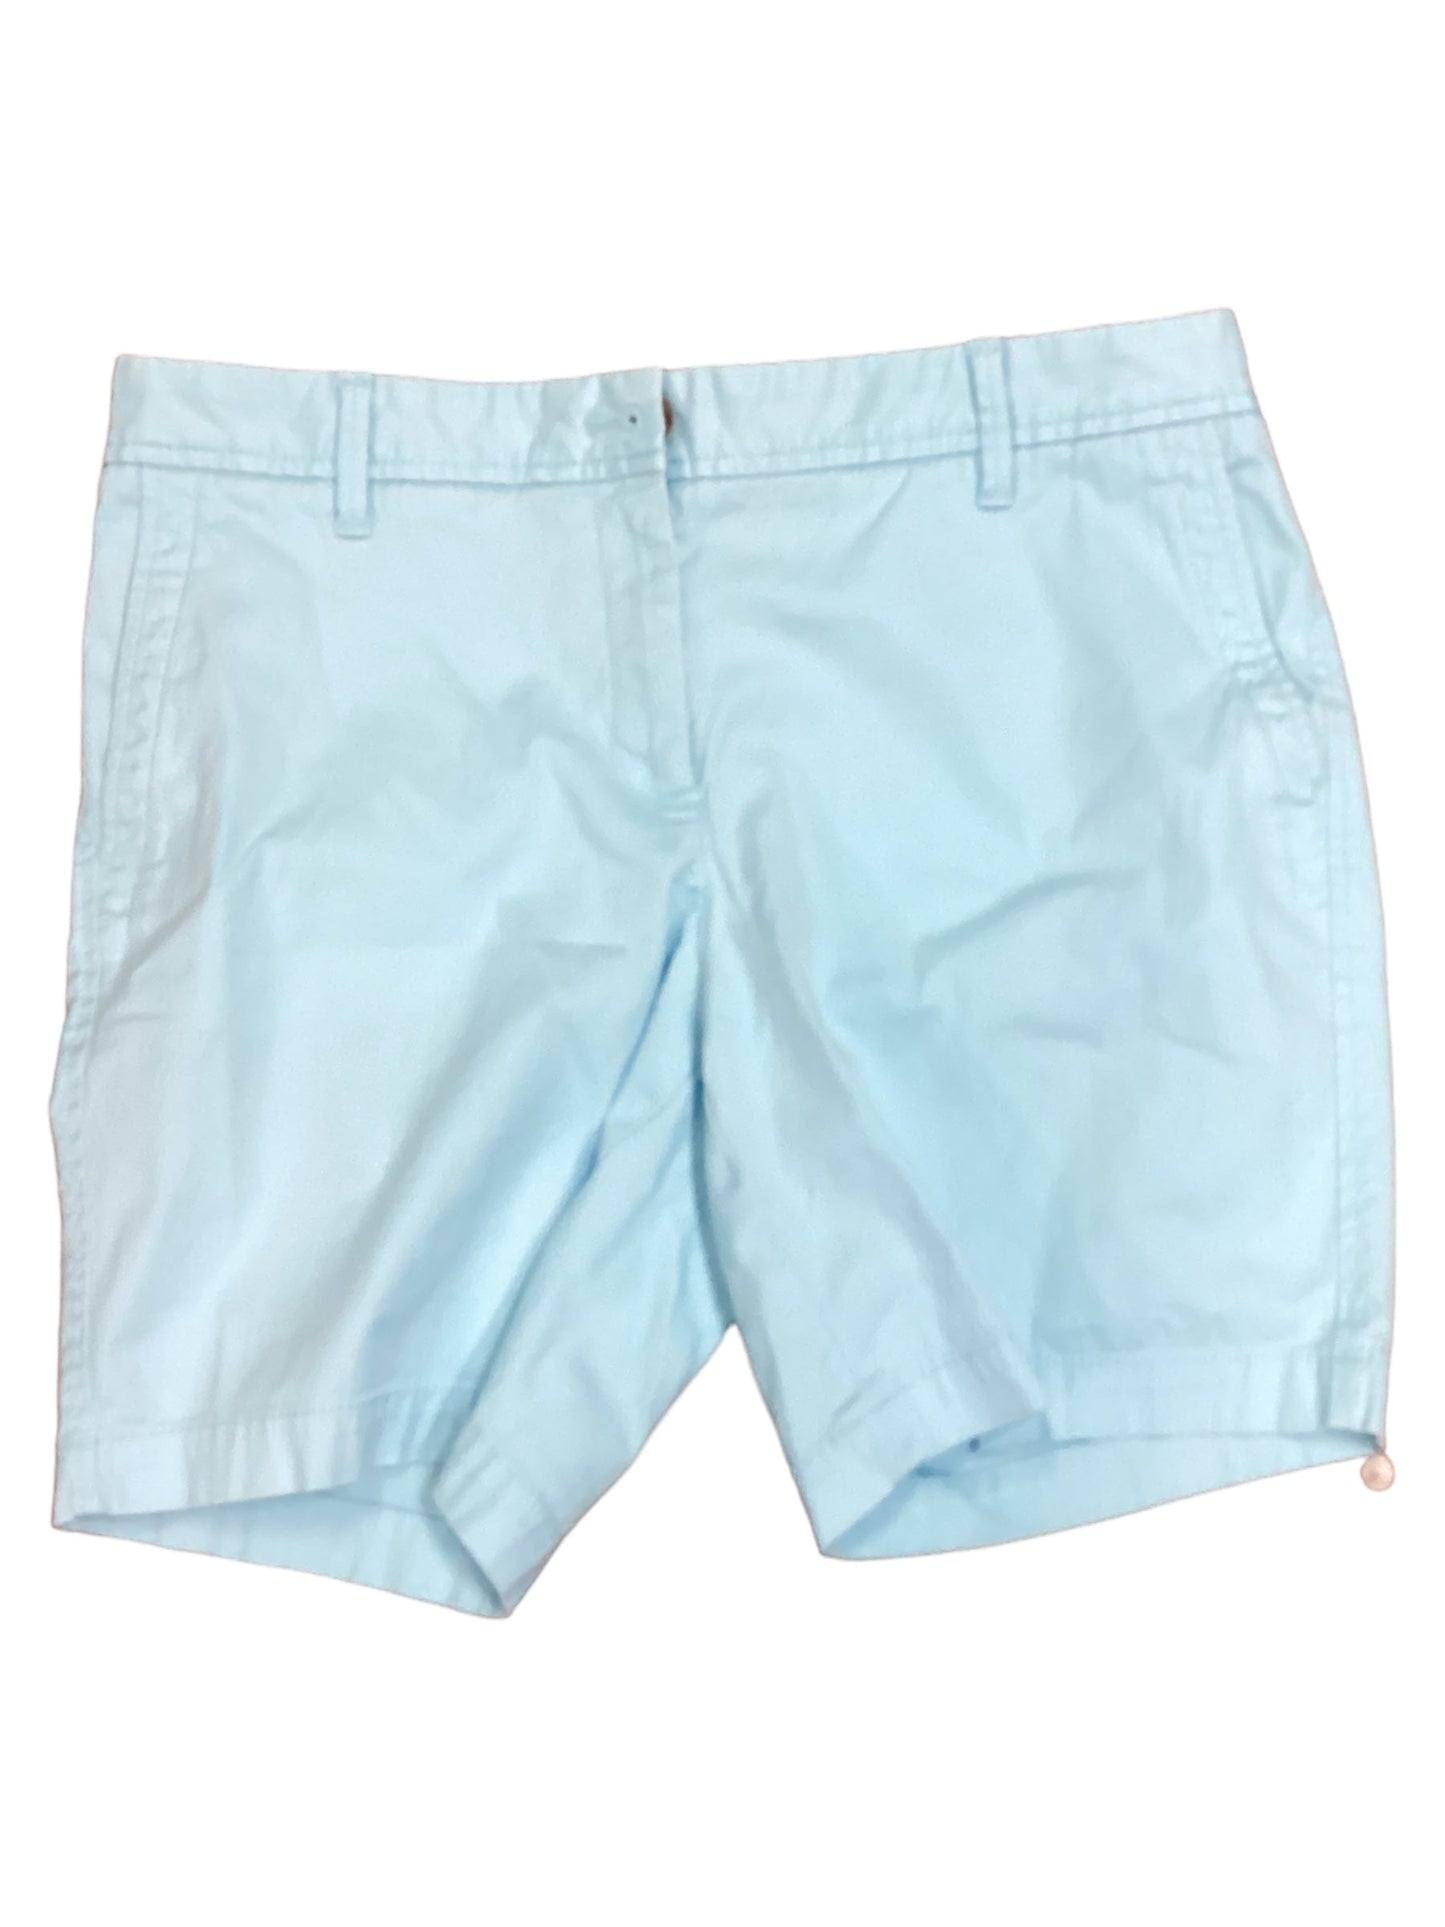 Shorts By Talbots  Size: 4